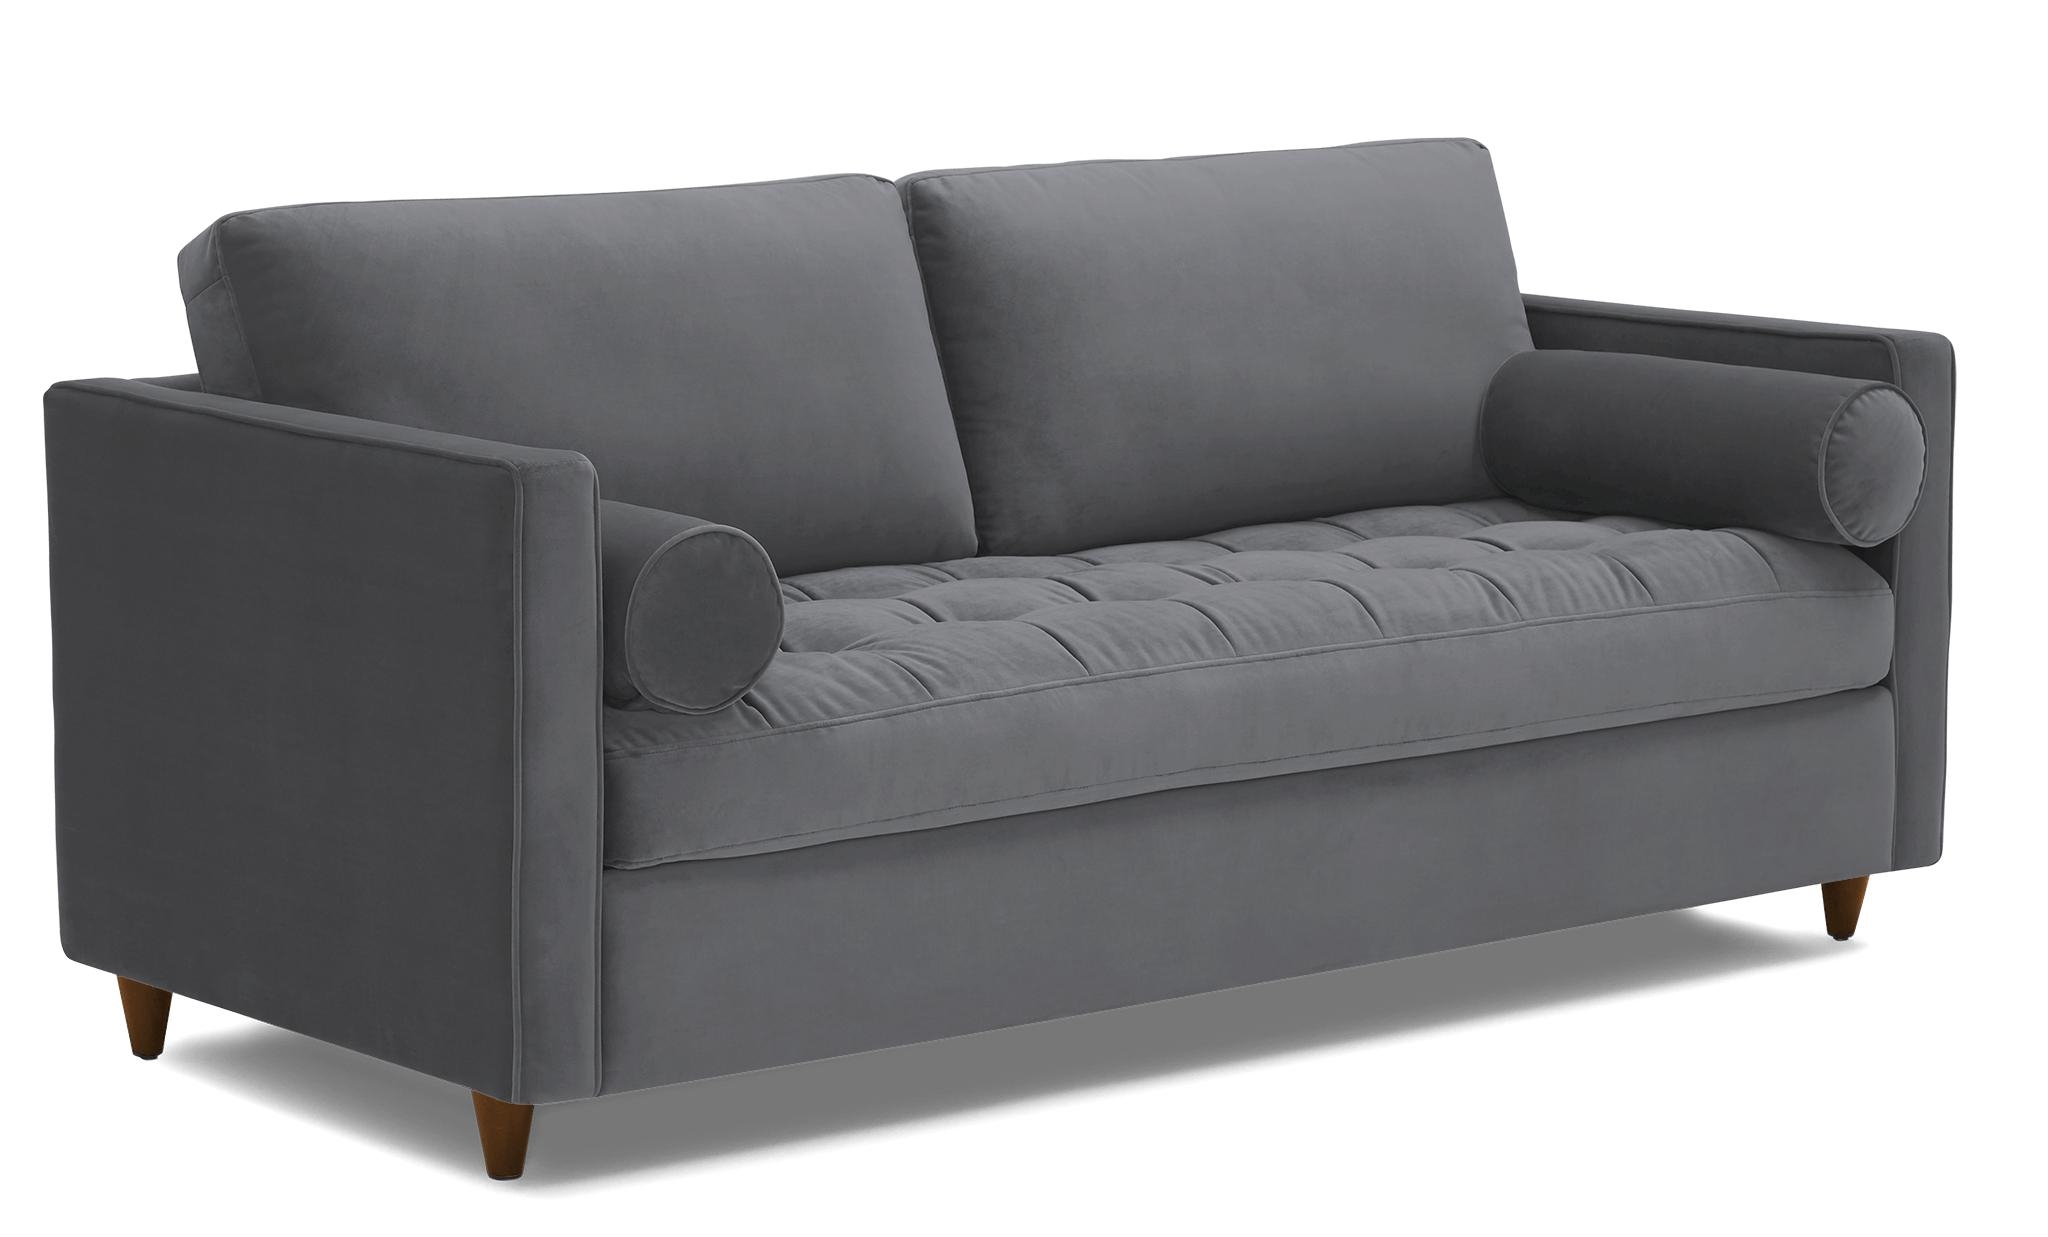 Gray Briar Mid Century Modern Sleeper Sofa - Essence Ash - Mocha - Image 1